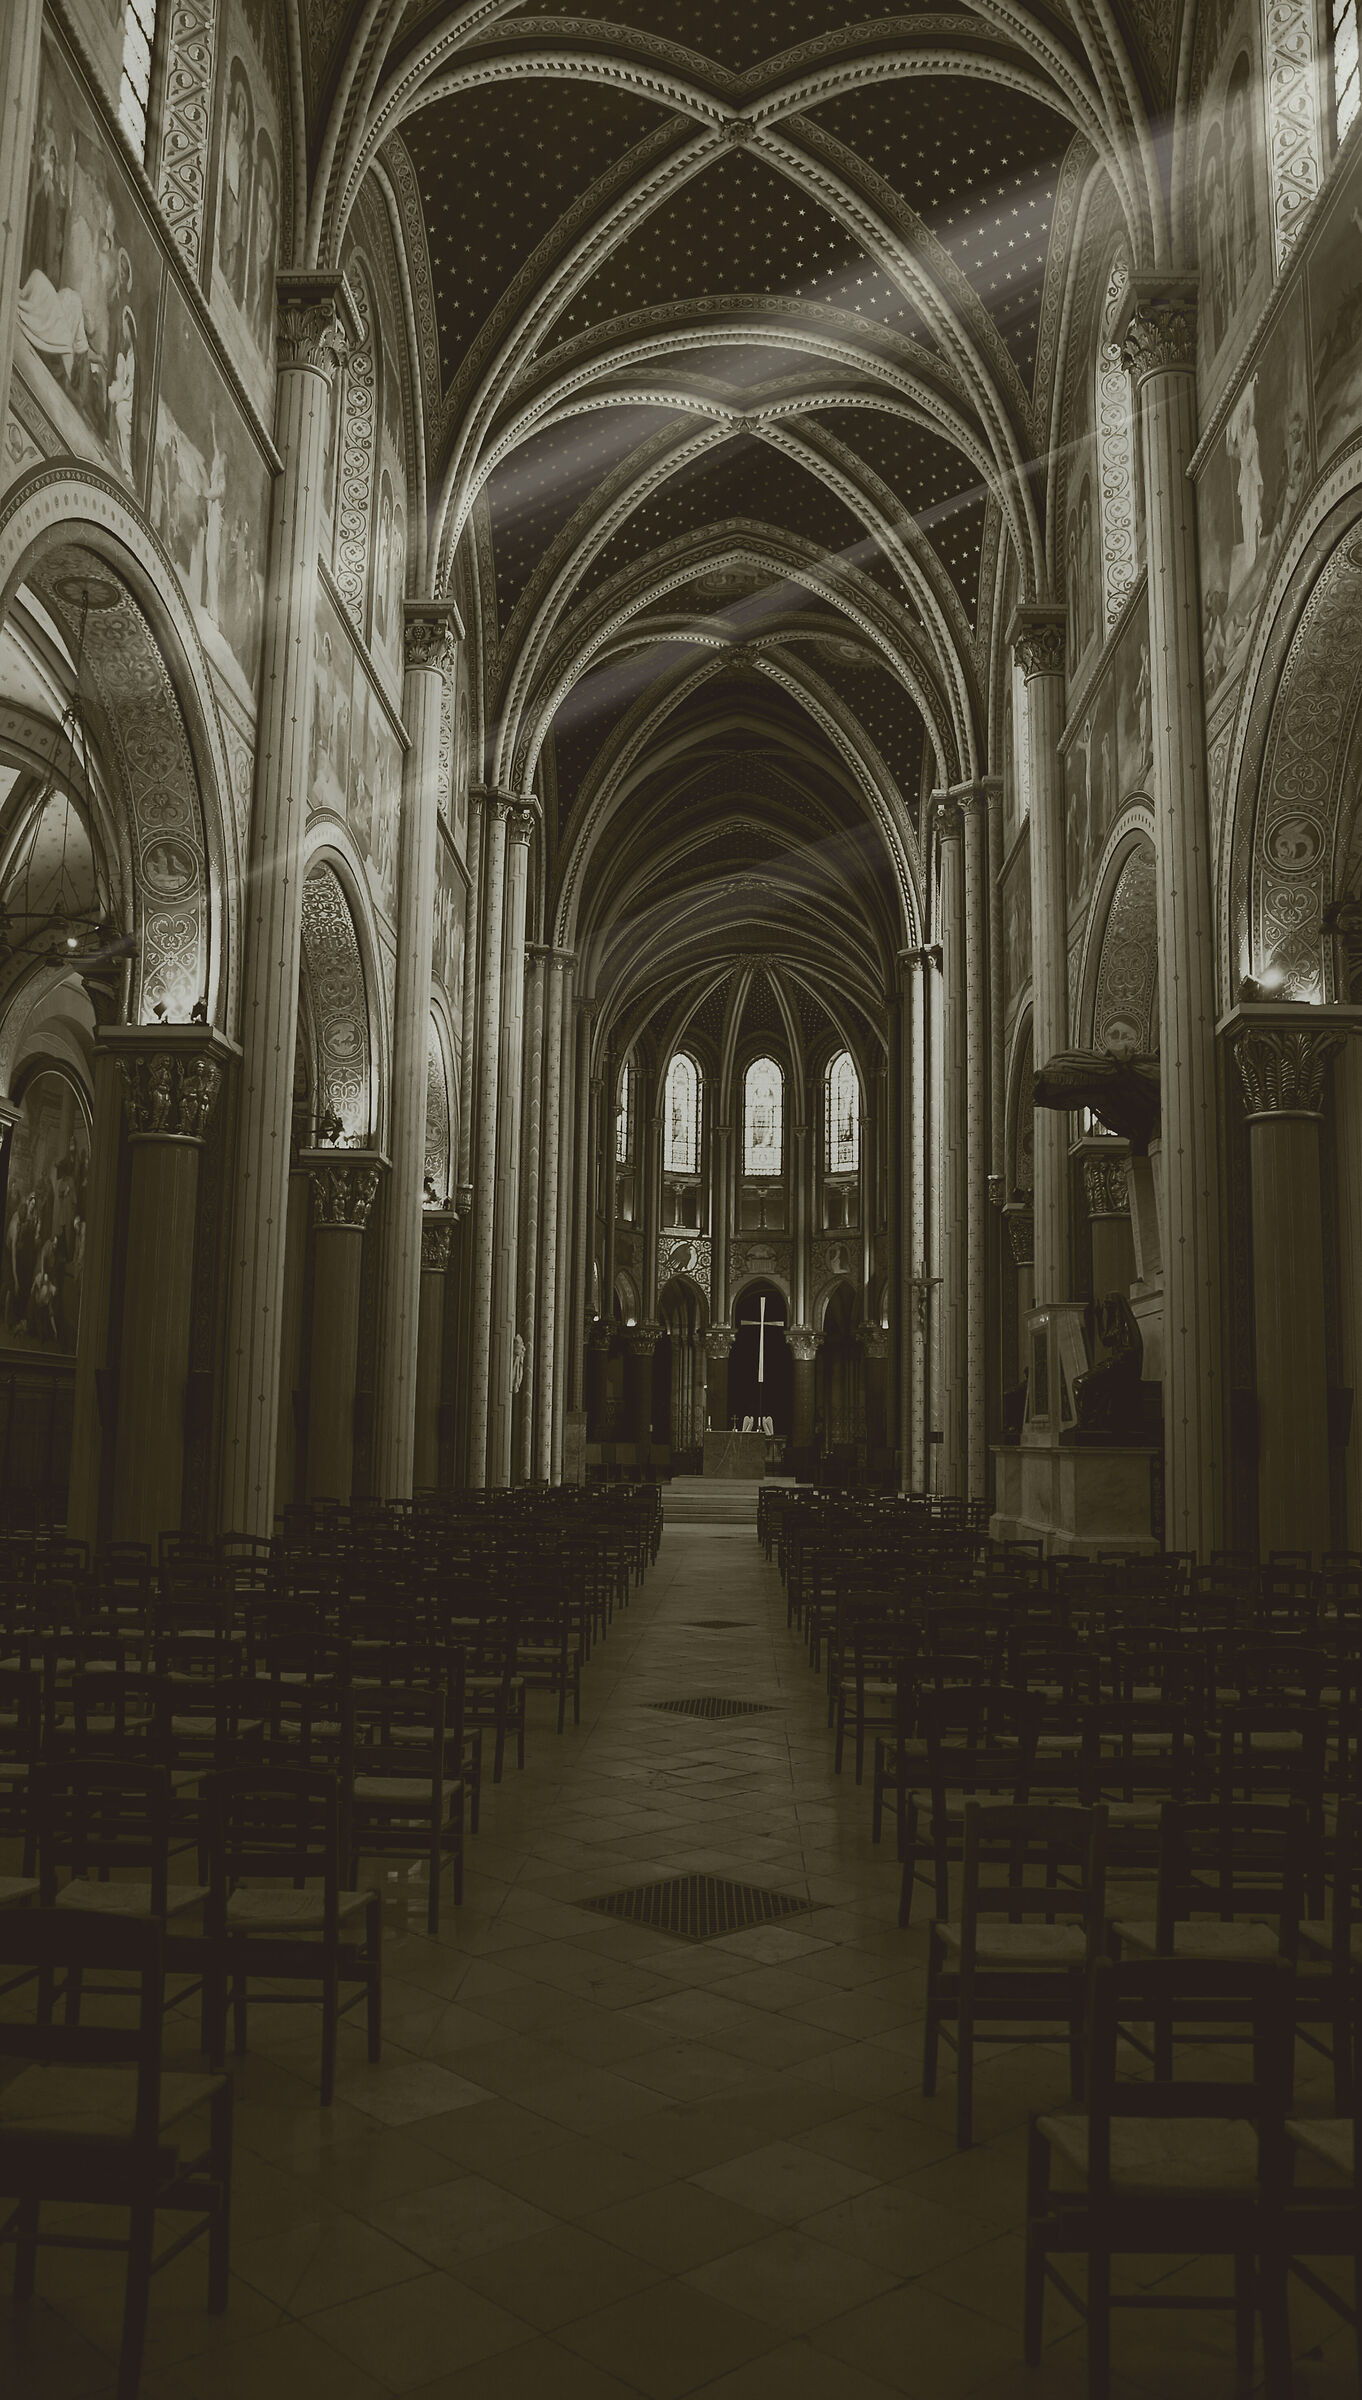 Chiesa di Saint-Germain-des-Prés, Parigi versione BN...